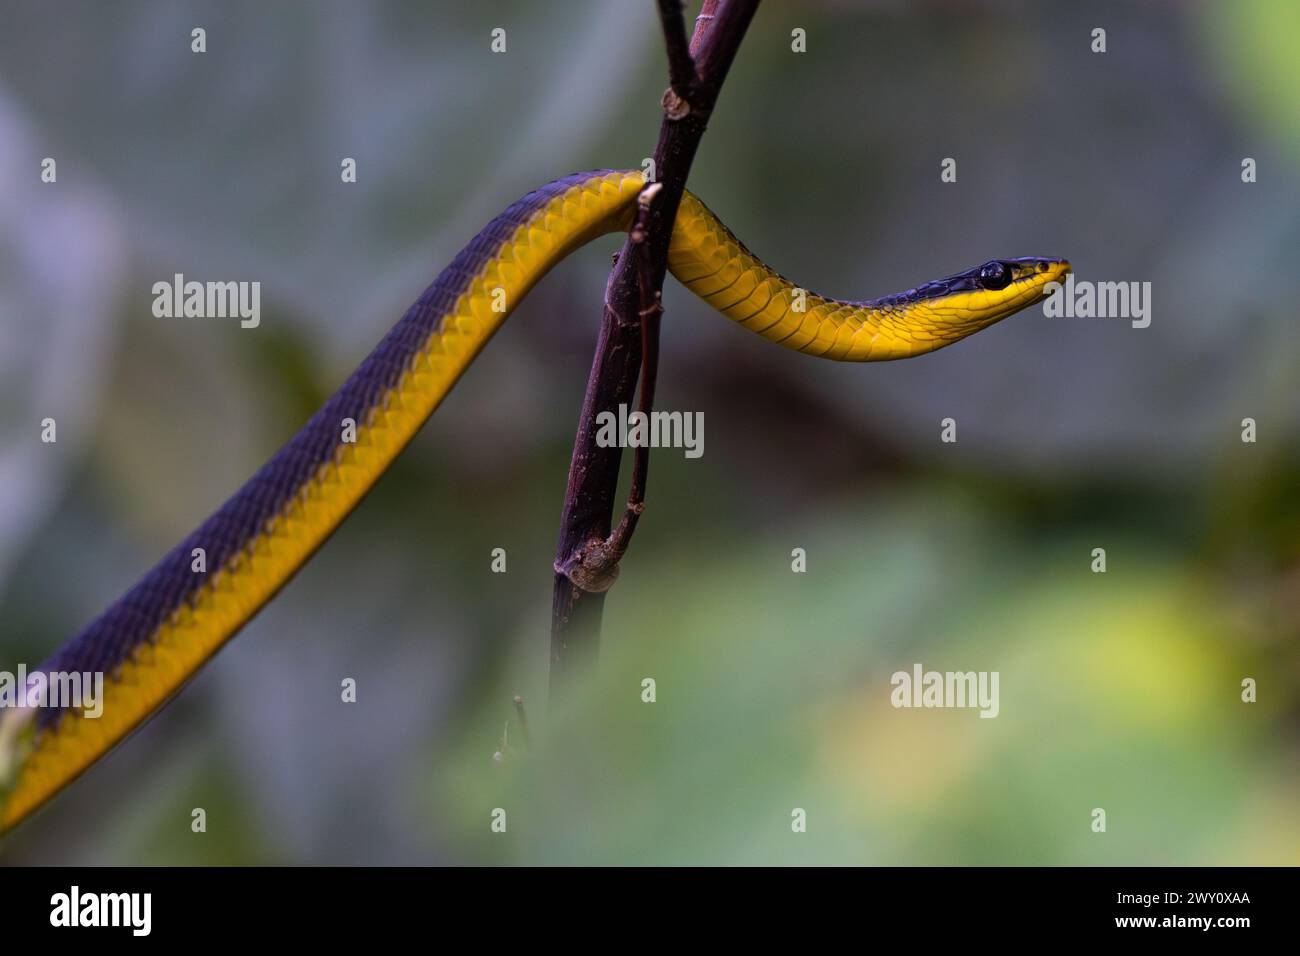 Common tree snake in Daintree National Park, Australia Stock Photo